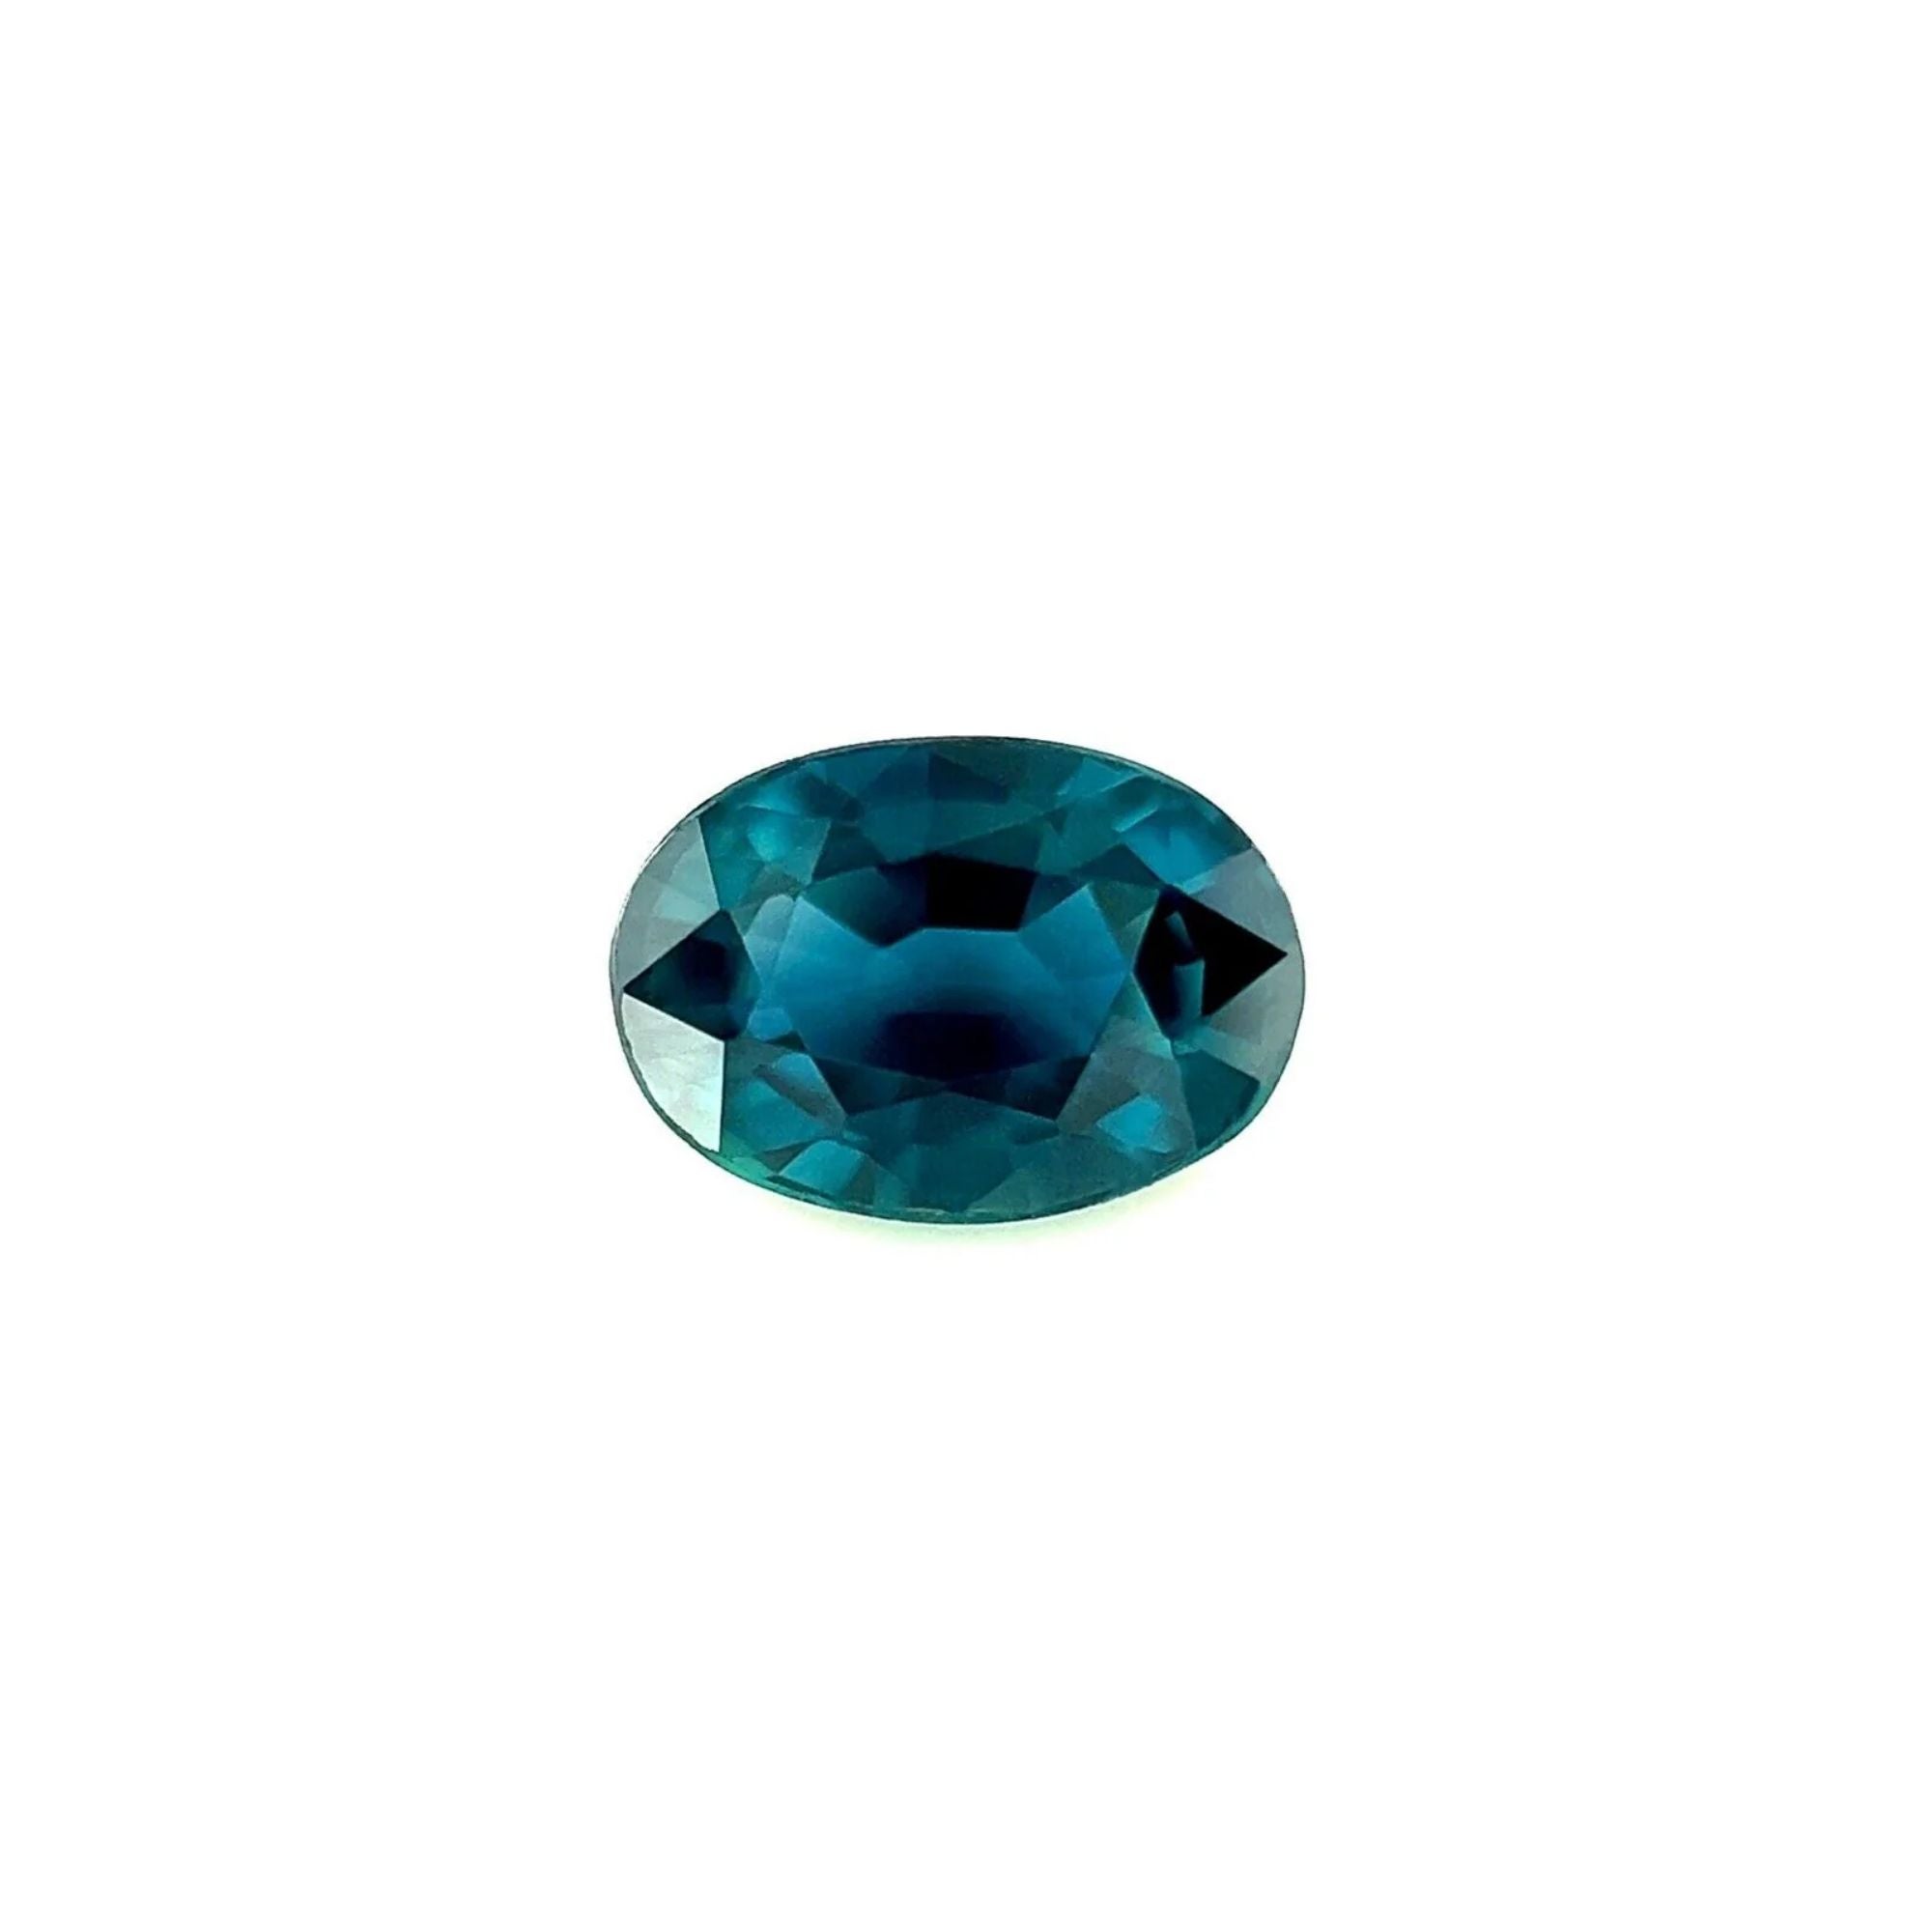 Pierre précieuse rare saphir bleu profond de taille ovale non traitée de 1,14 carat, certifiée GIA en vente